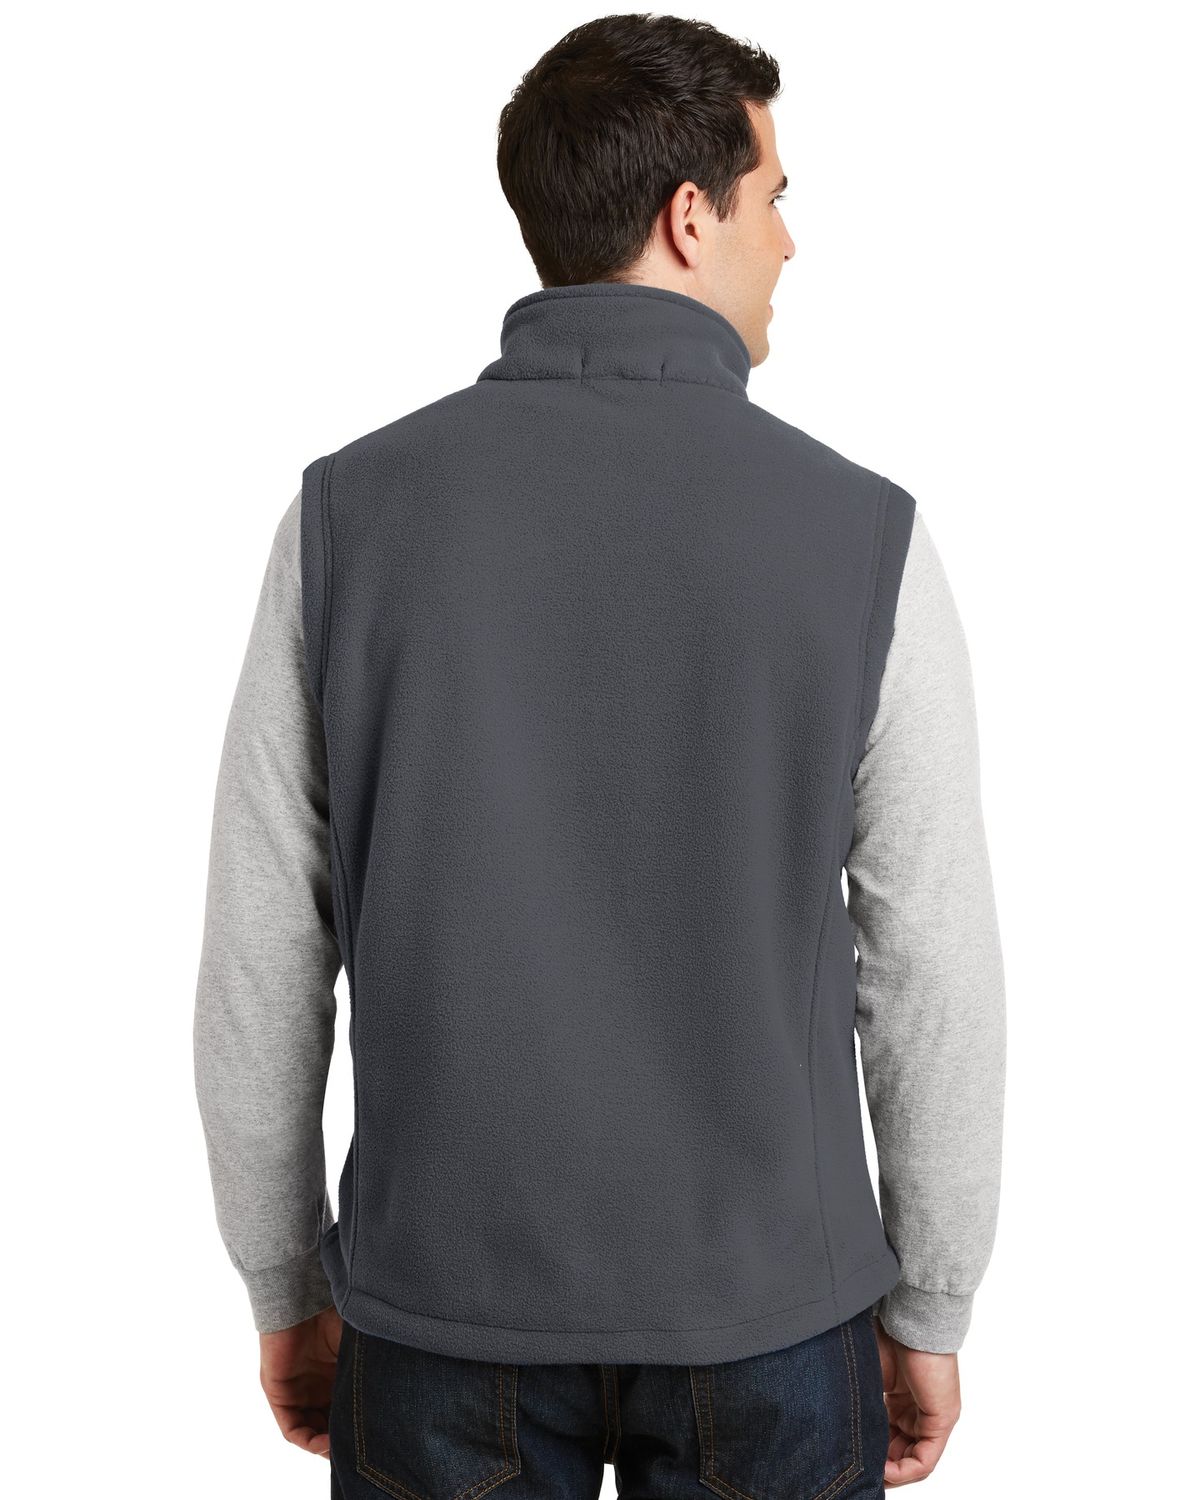 'Port Authority F219 Polyester Value Fleece Vest '